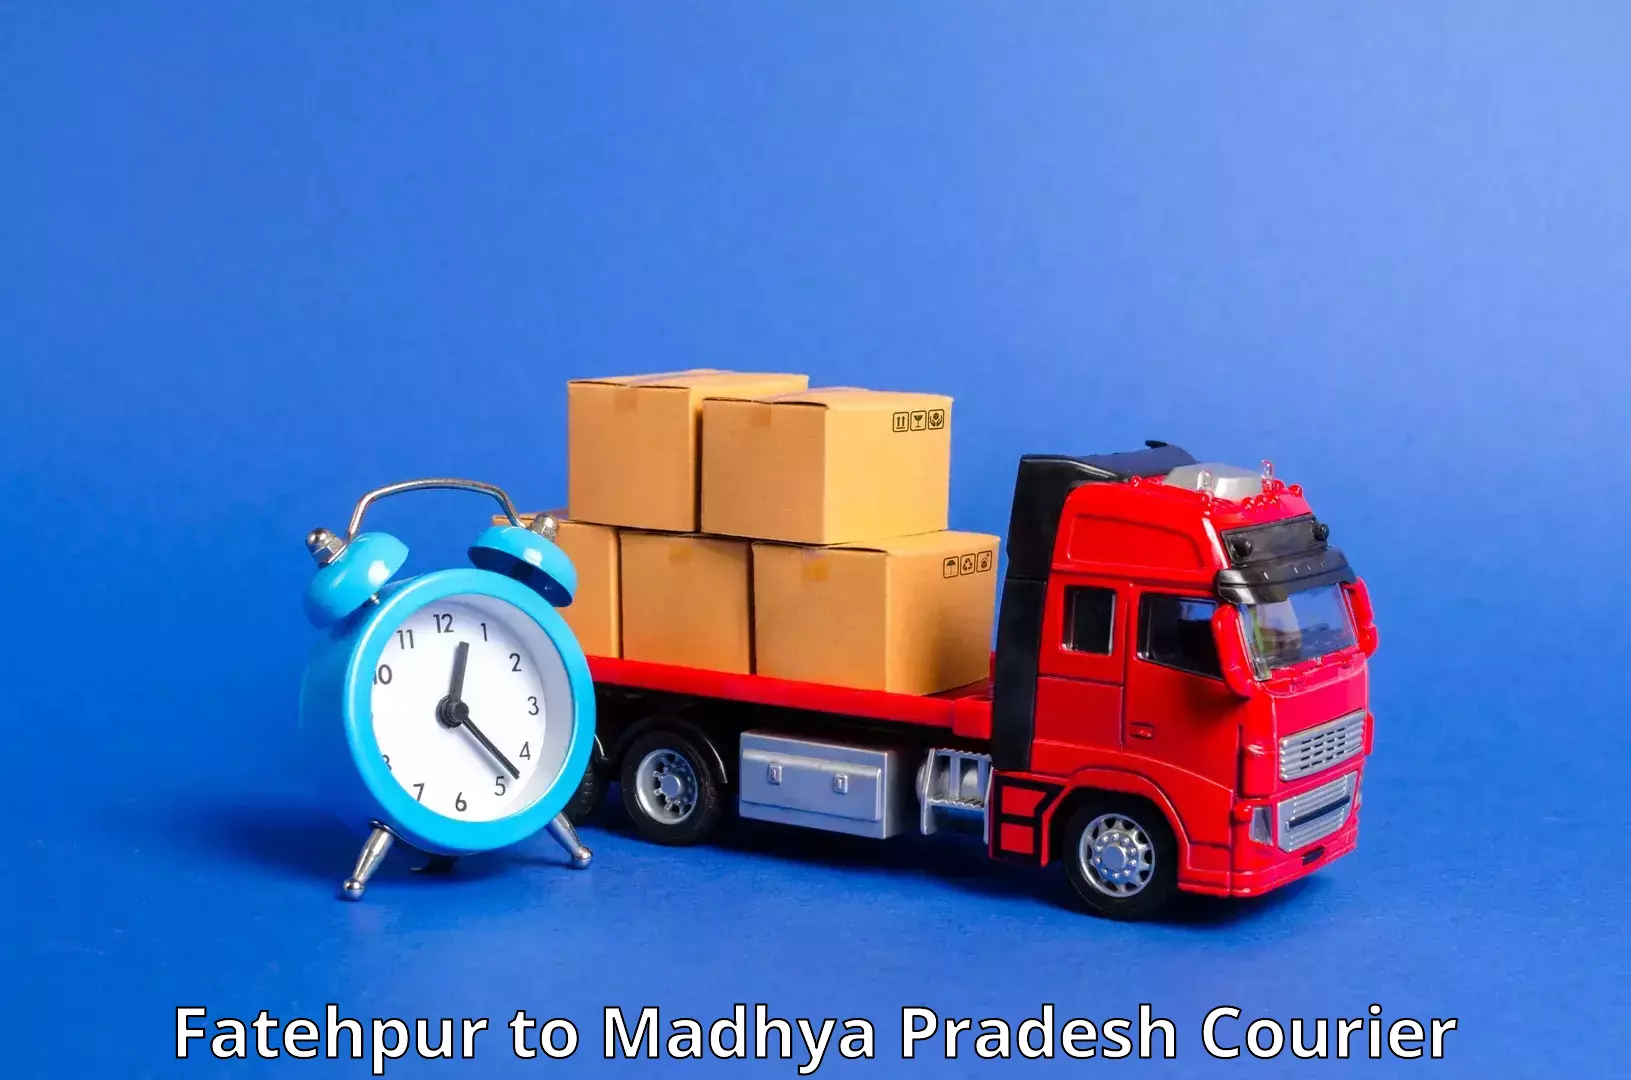 High-speed parcel service Fatehpur to Madhya Pradesh